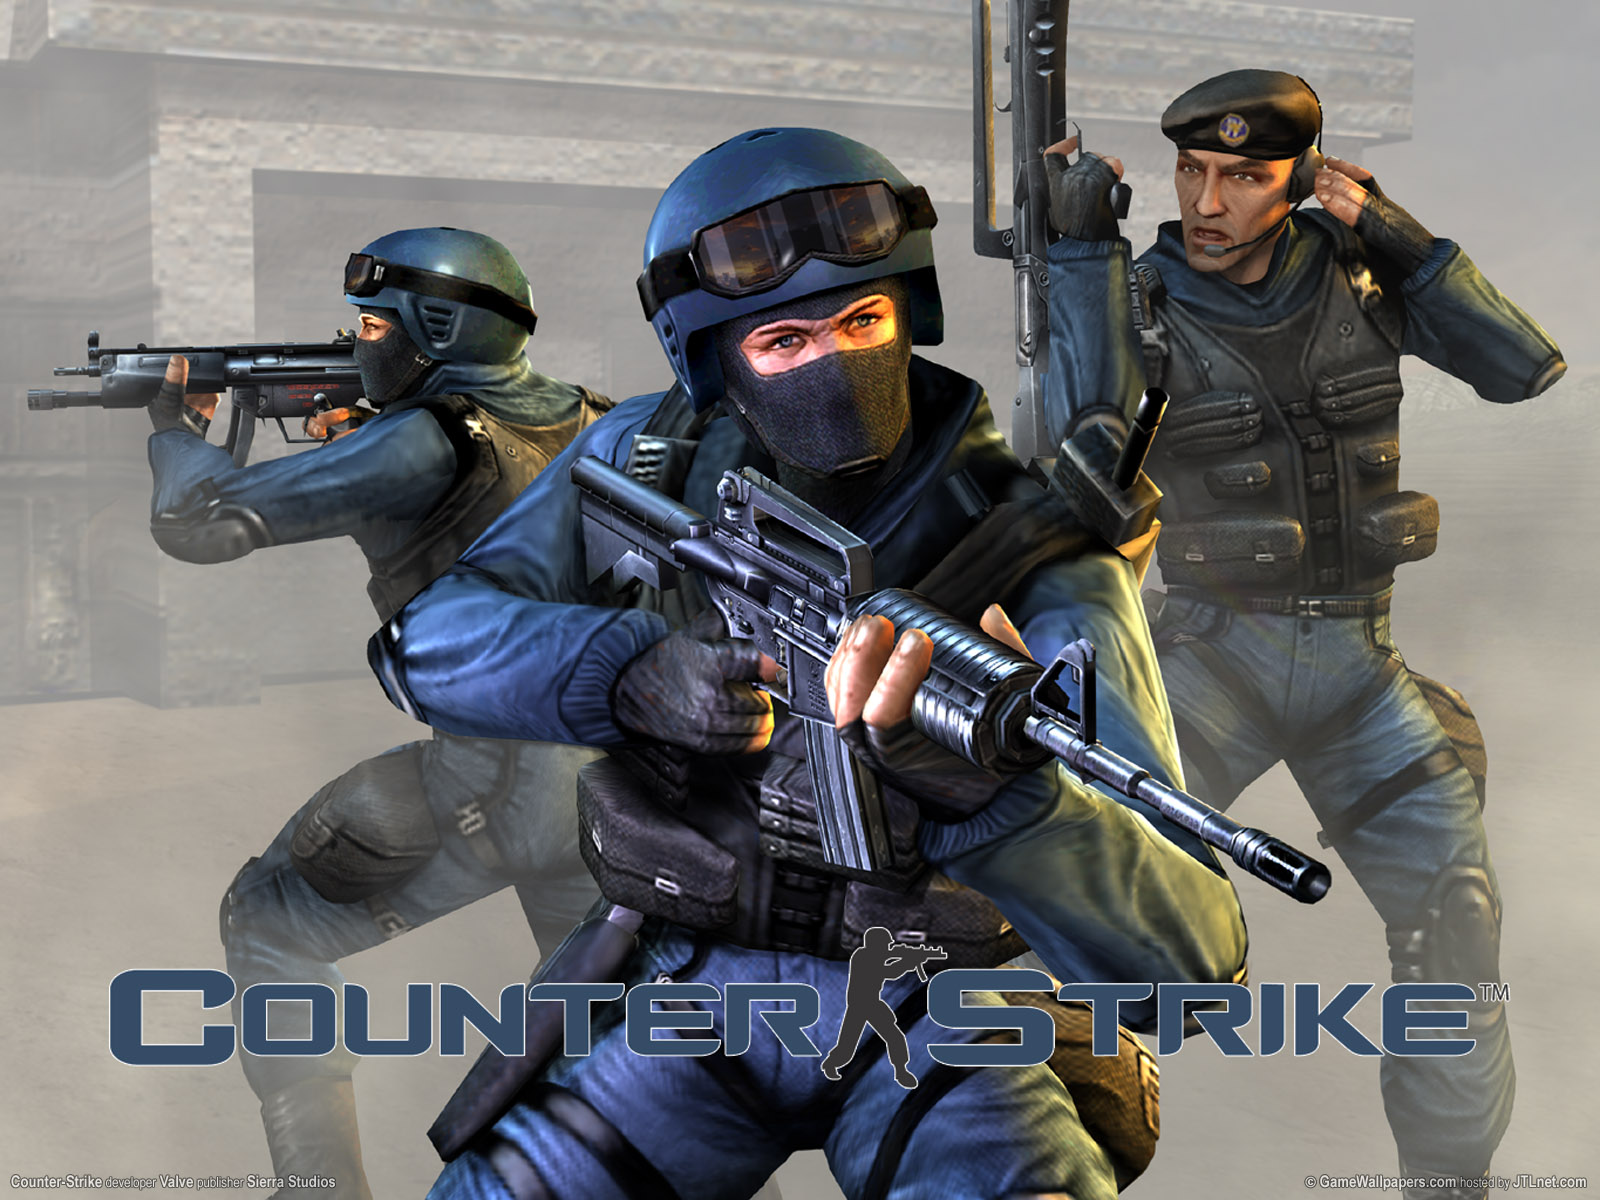 Description: Counter-Strike-1.6-Free-Download Download game petualangan tembak tembakan android counter strike 1.6